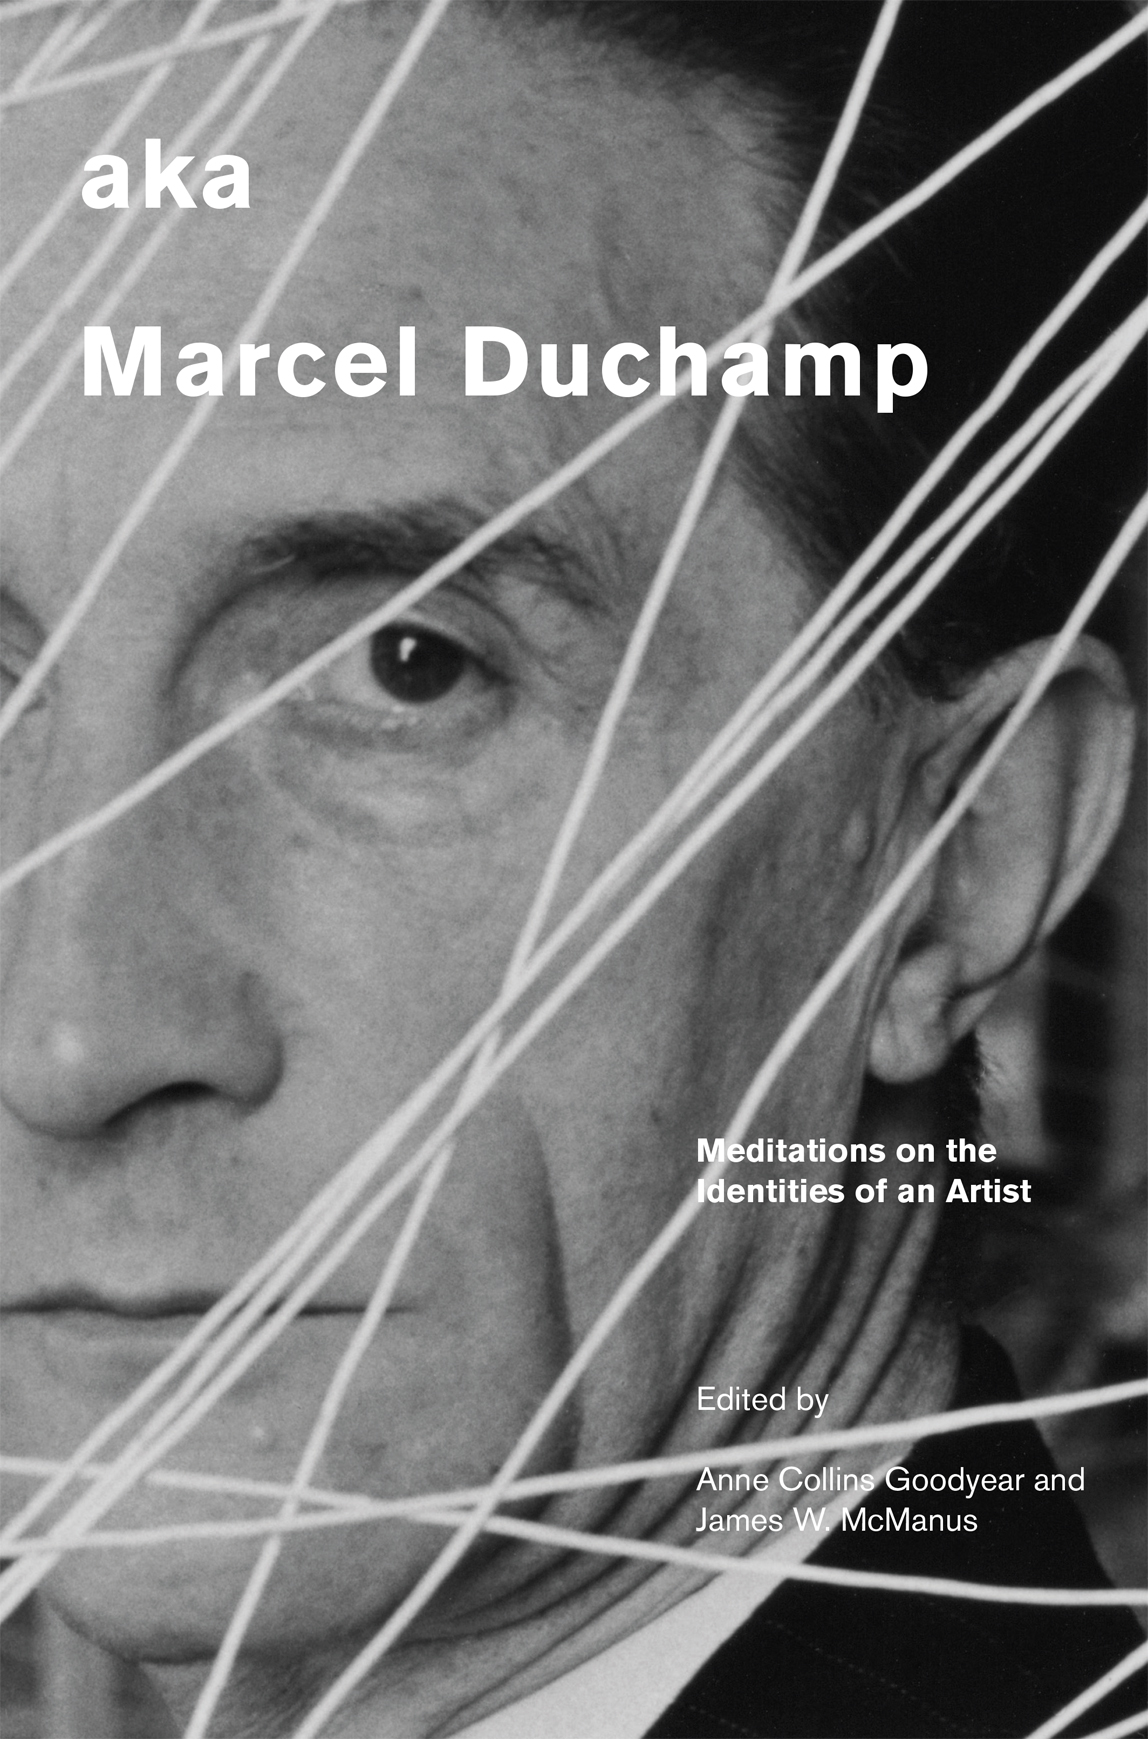 AKA Marcel Duchamp meditations on the identities of an artist - photo 1